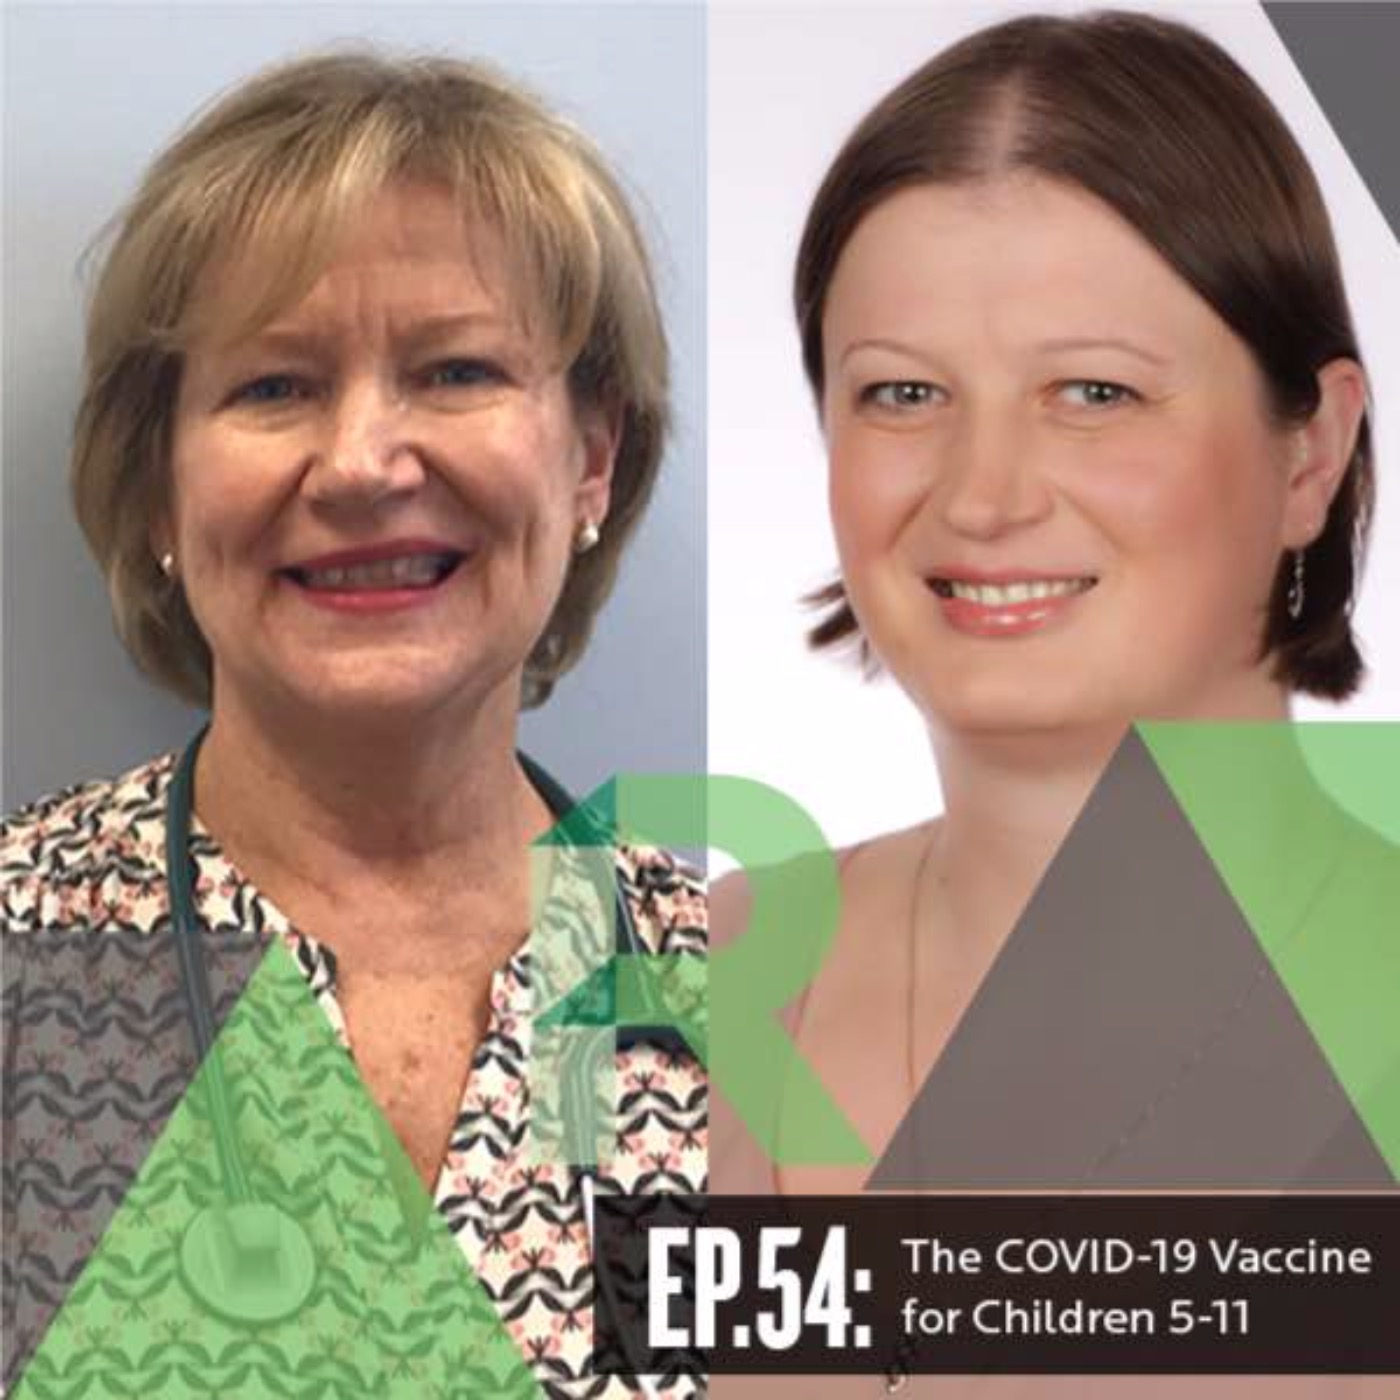 Ep 54: The COVID-19 Vaccine for Children 5-11